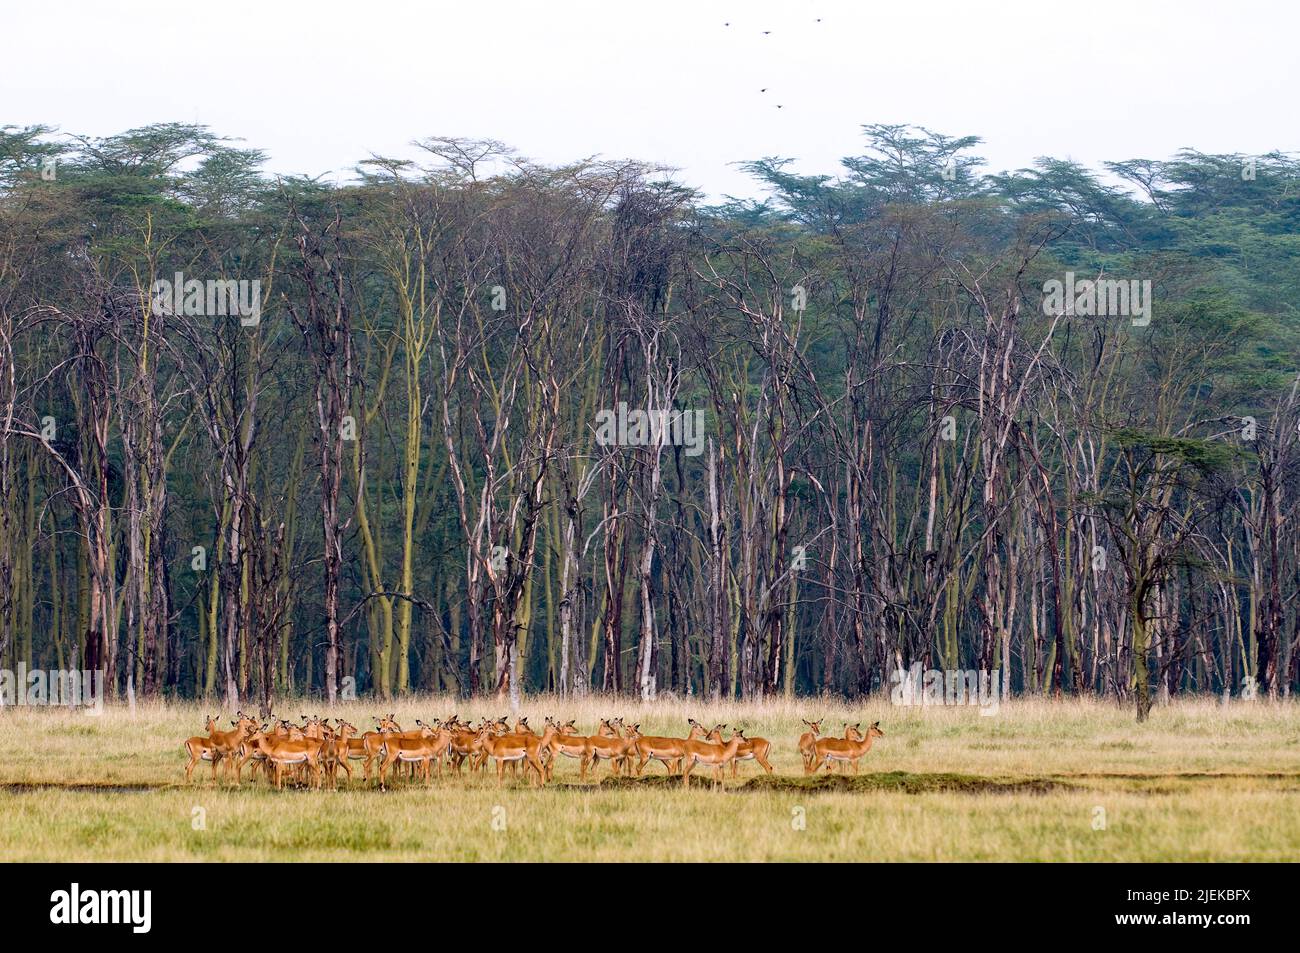 Big herd of Impala anteloped (Aepyceros melampus) in front of the forest of Fever Trees (Acasia xanthophloea) at Lake Nakuru, Kenya. Stock Photo